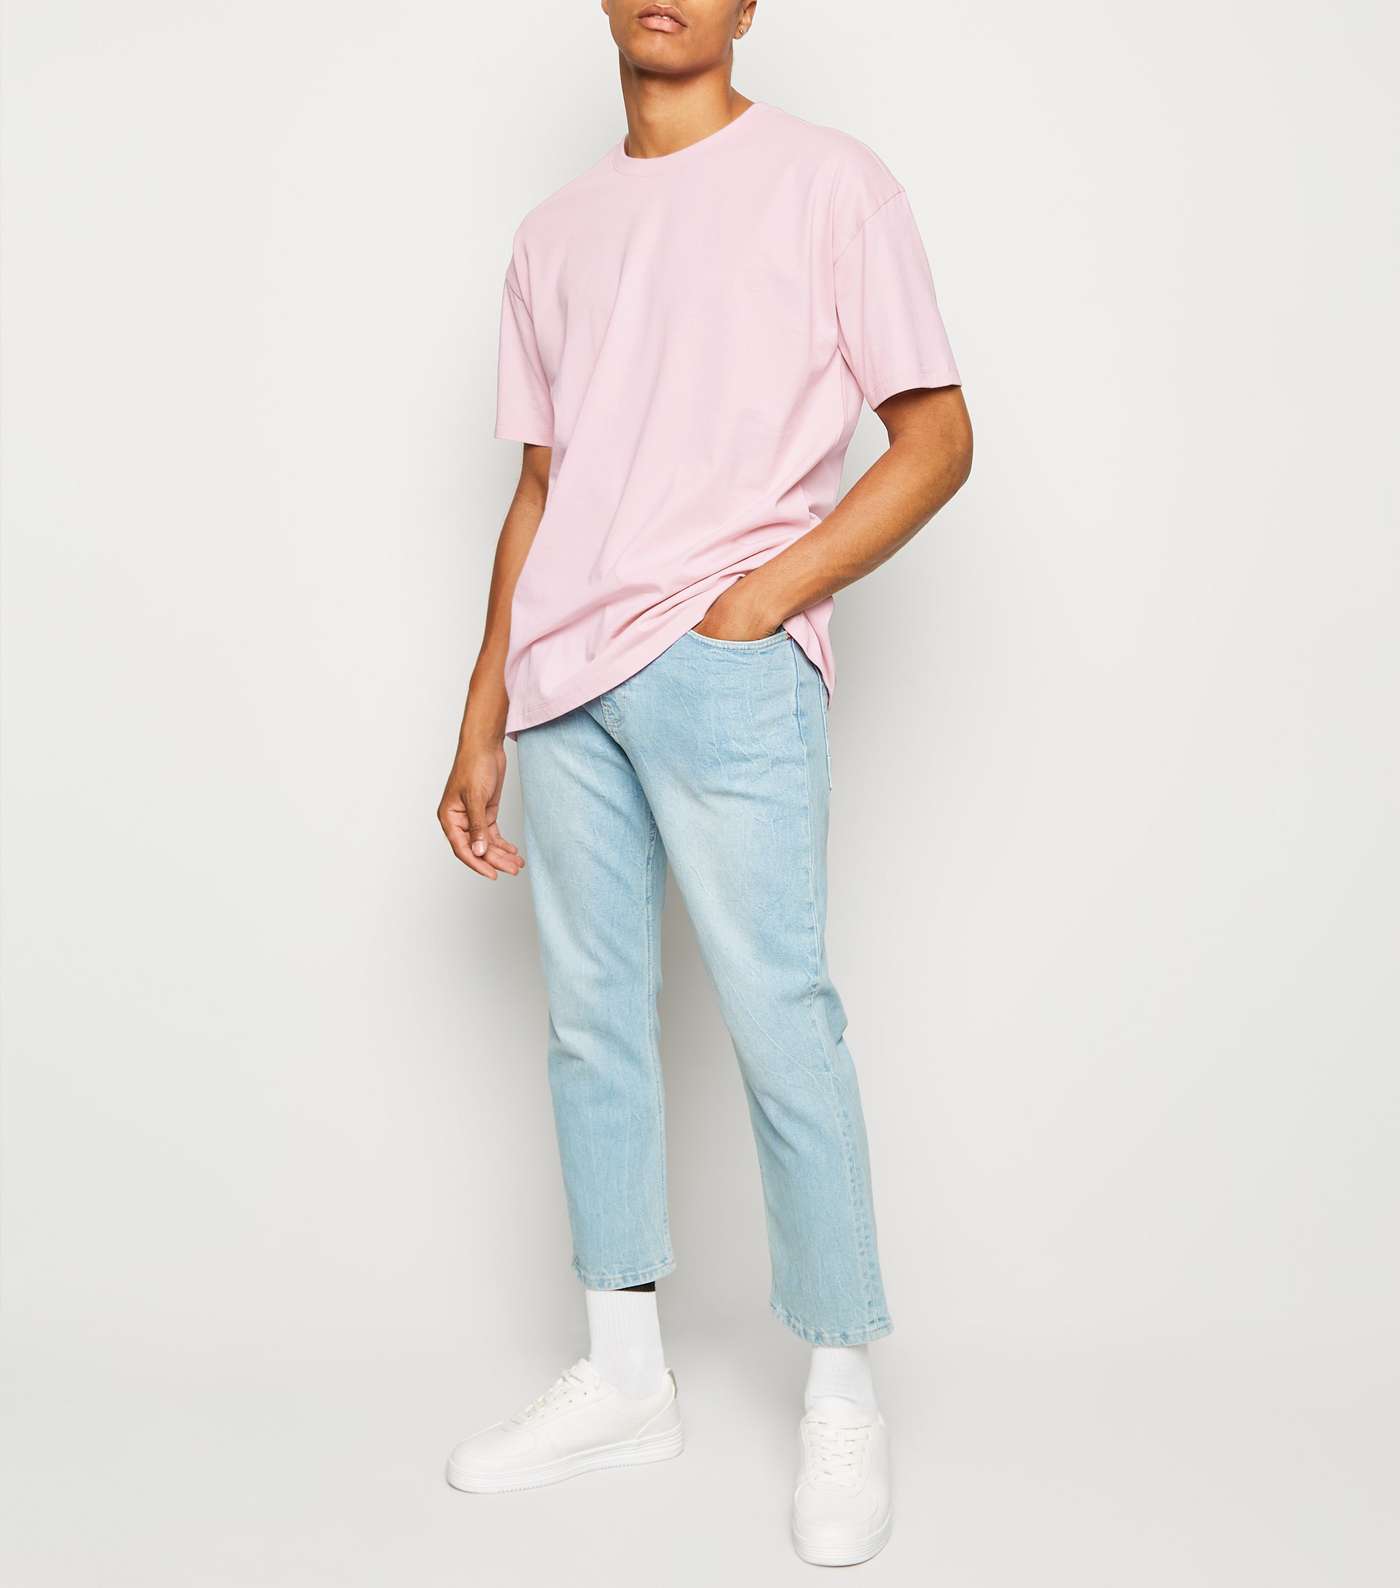 Pale Pink Oversized Cotton T-Shirt Image 2